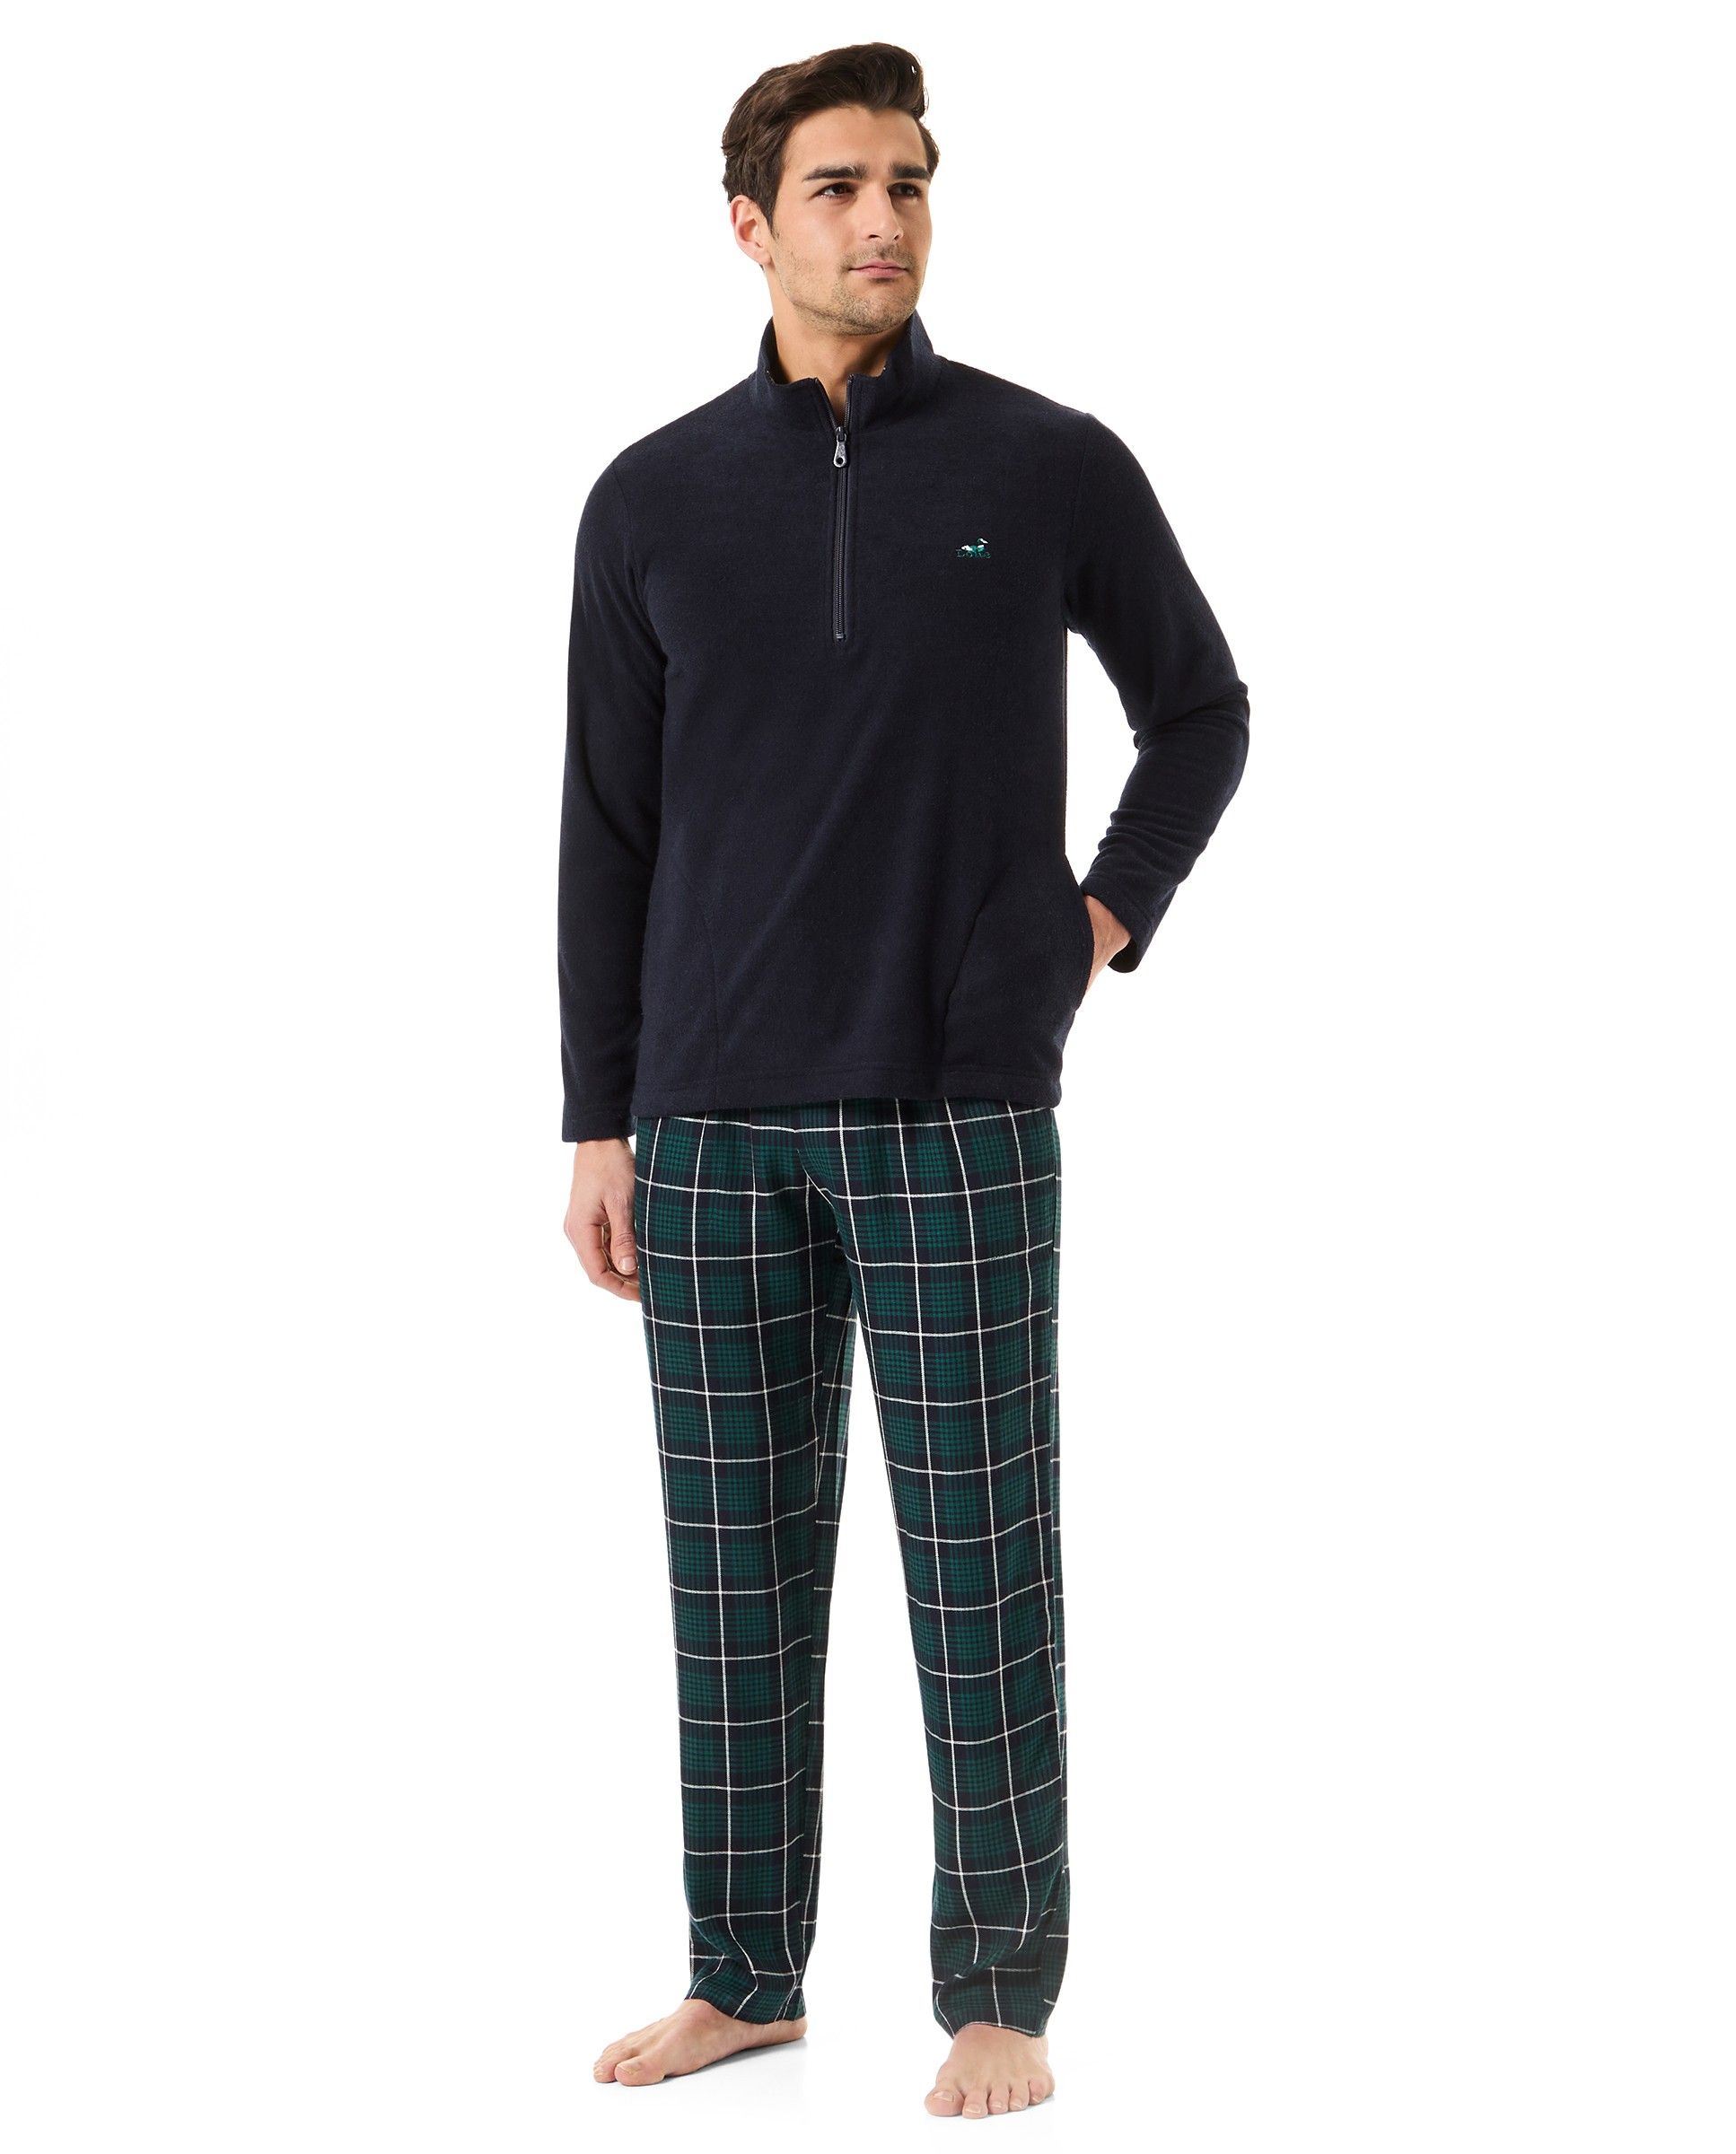 Men's long-sleeved mixed plaid winter pyjamas